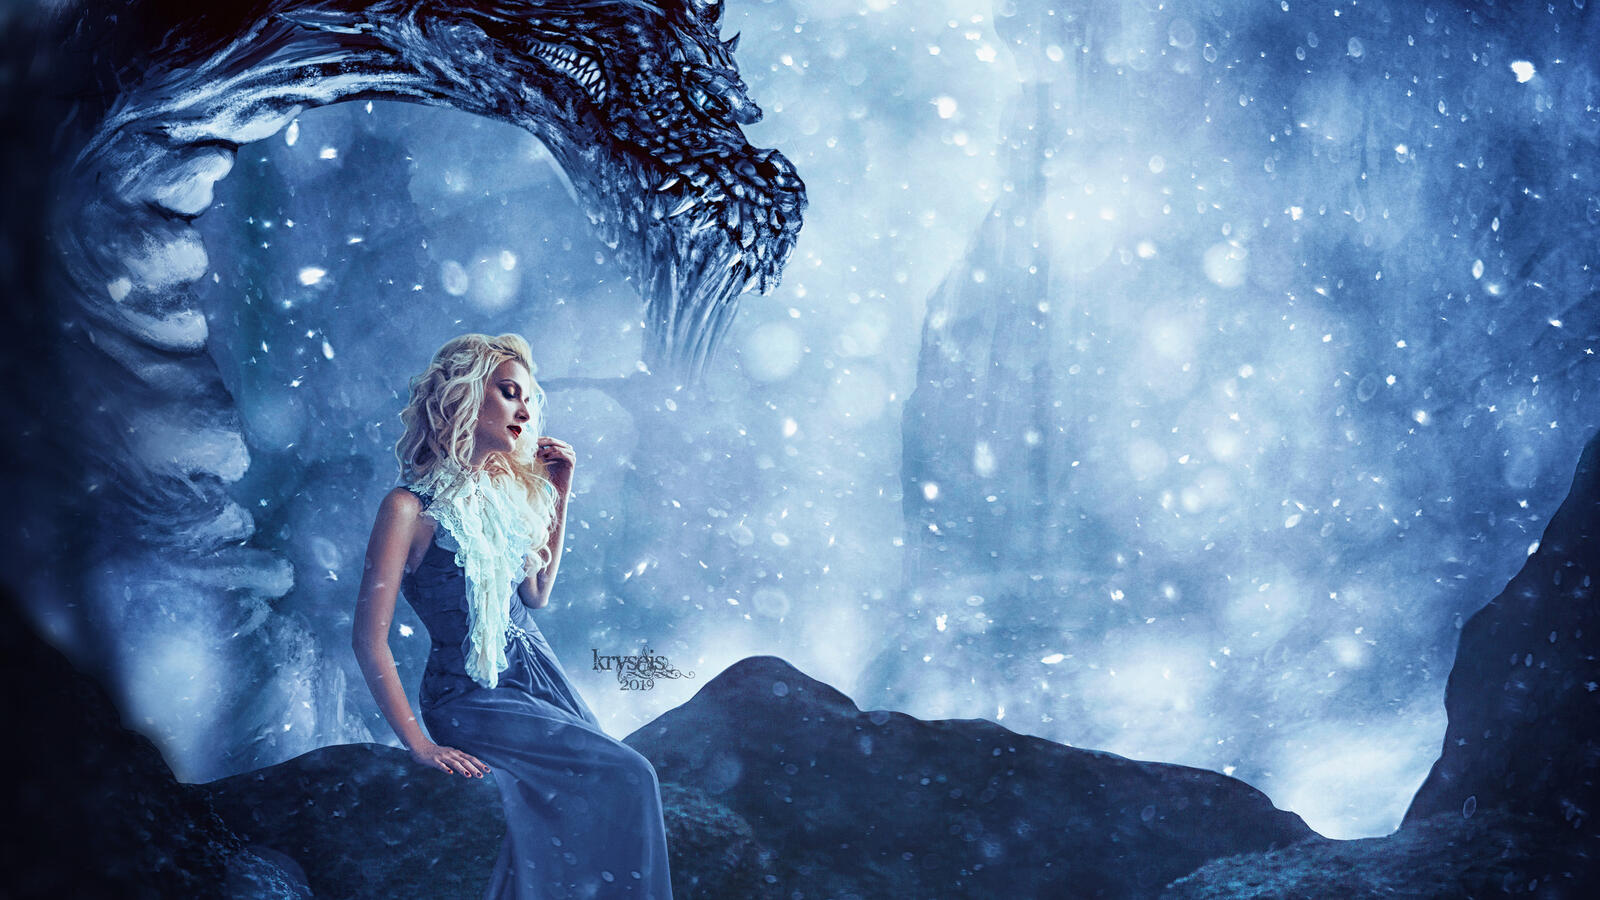 Wallpapers Daenerys Targaryen Game Of Thrones season 8 on the desktop